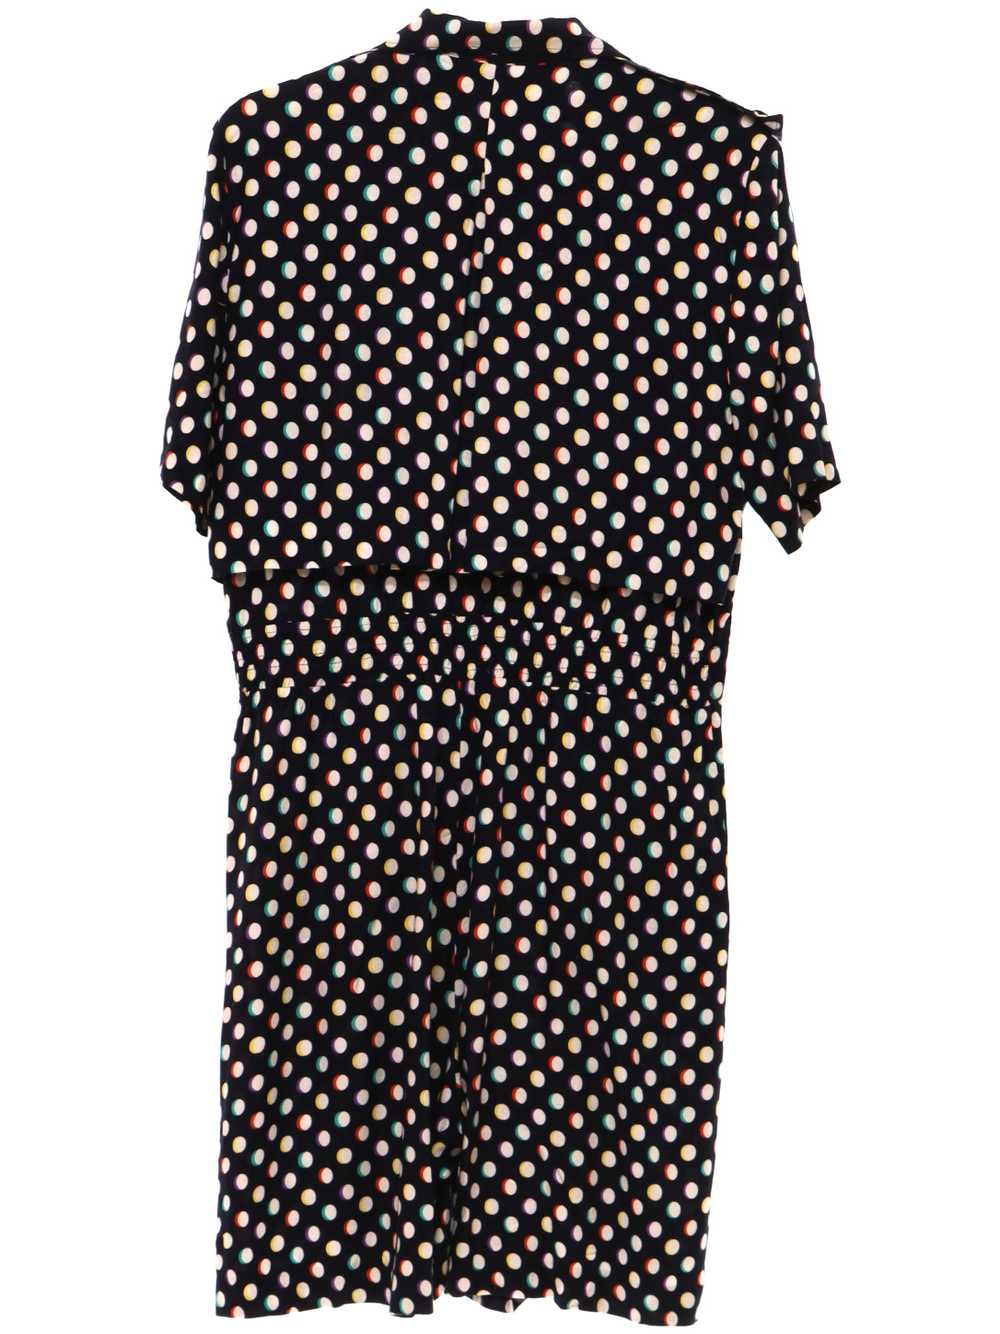 1990's SLPetites Rayon Skorts Dress - image 3